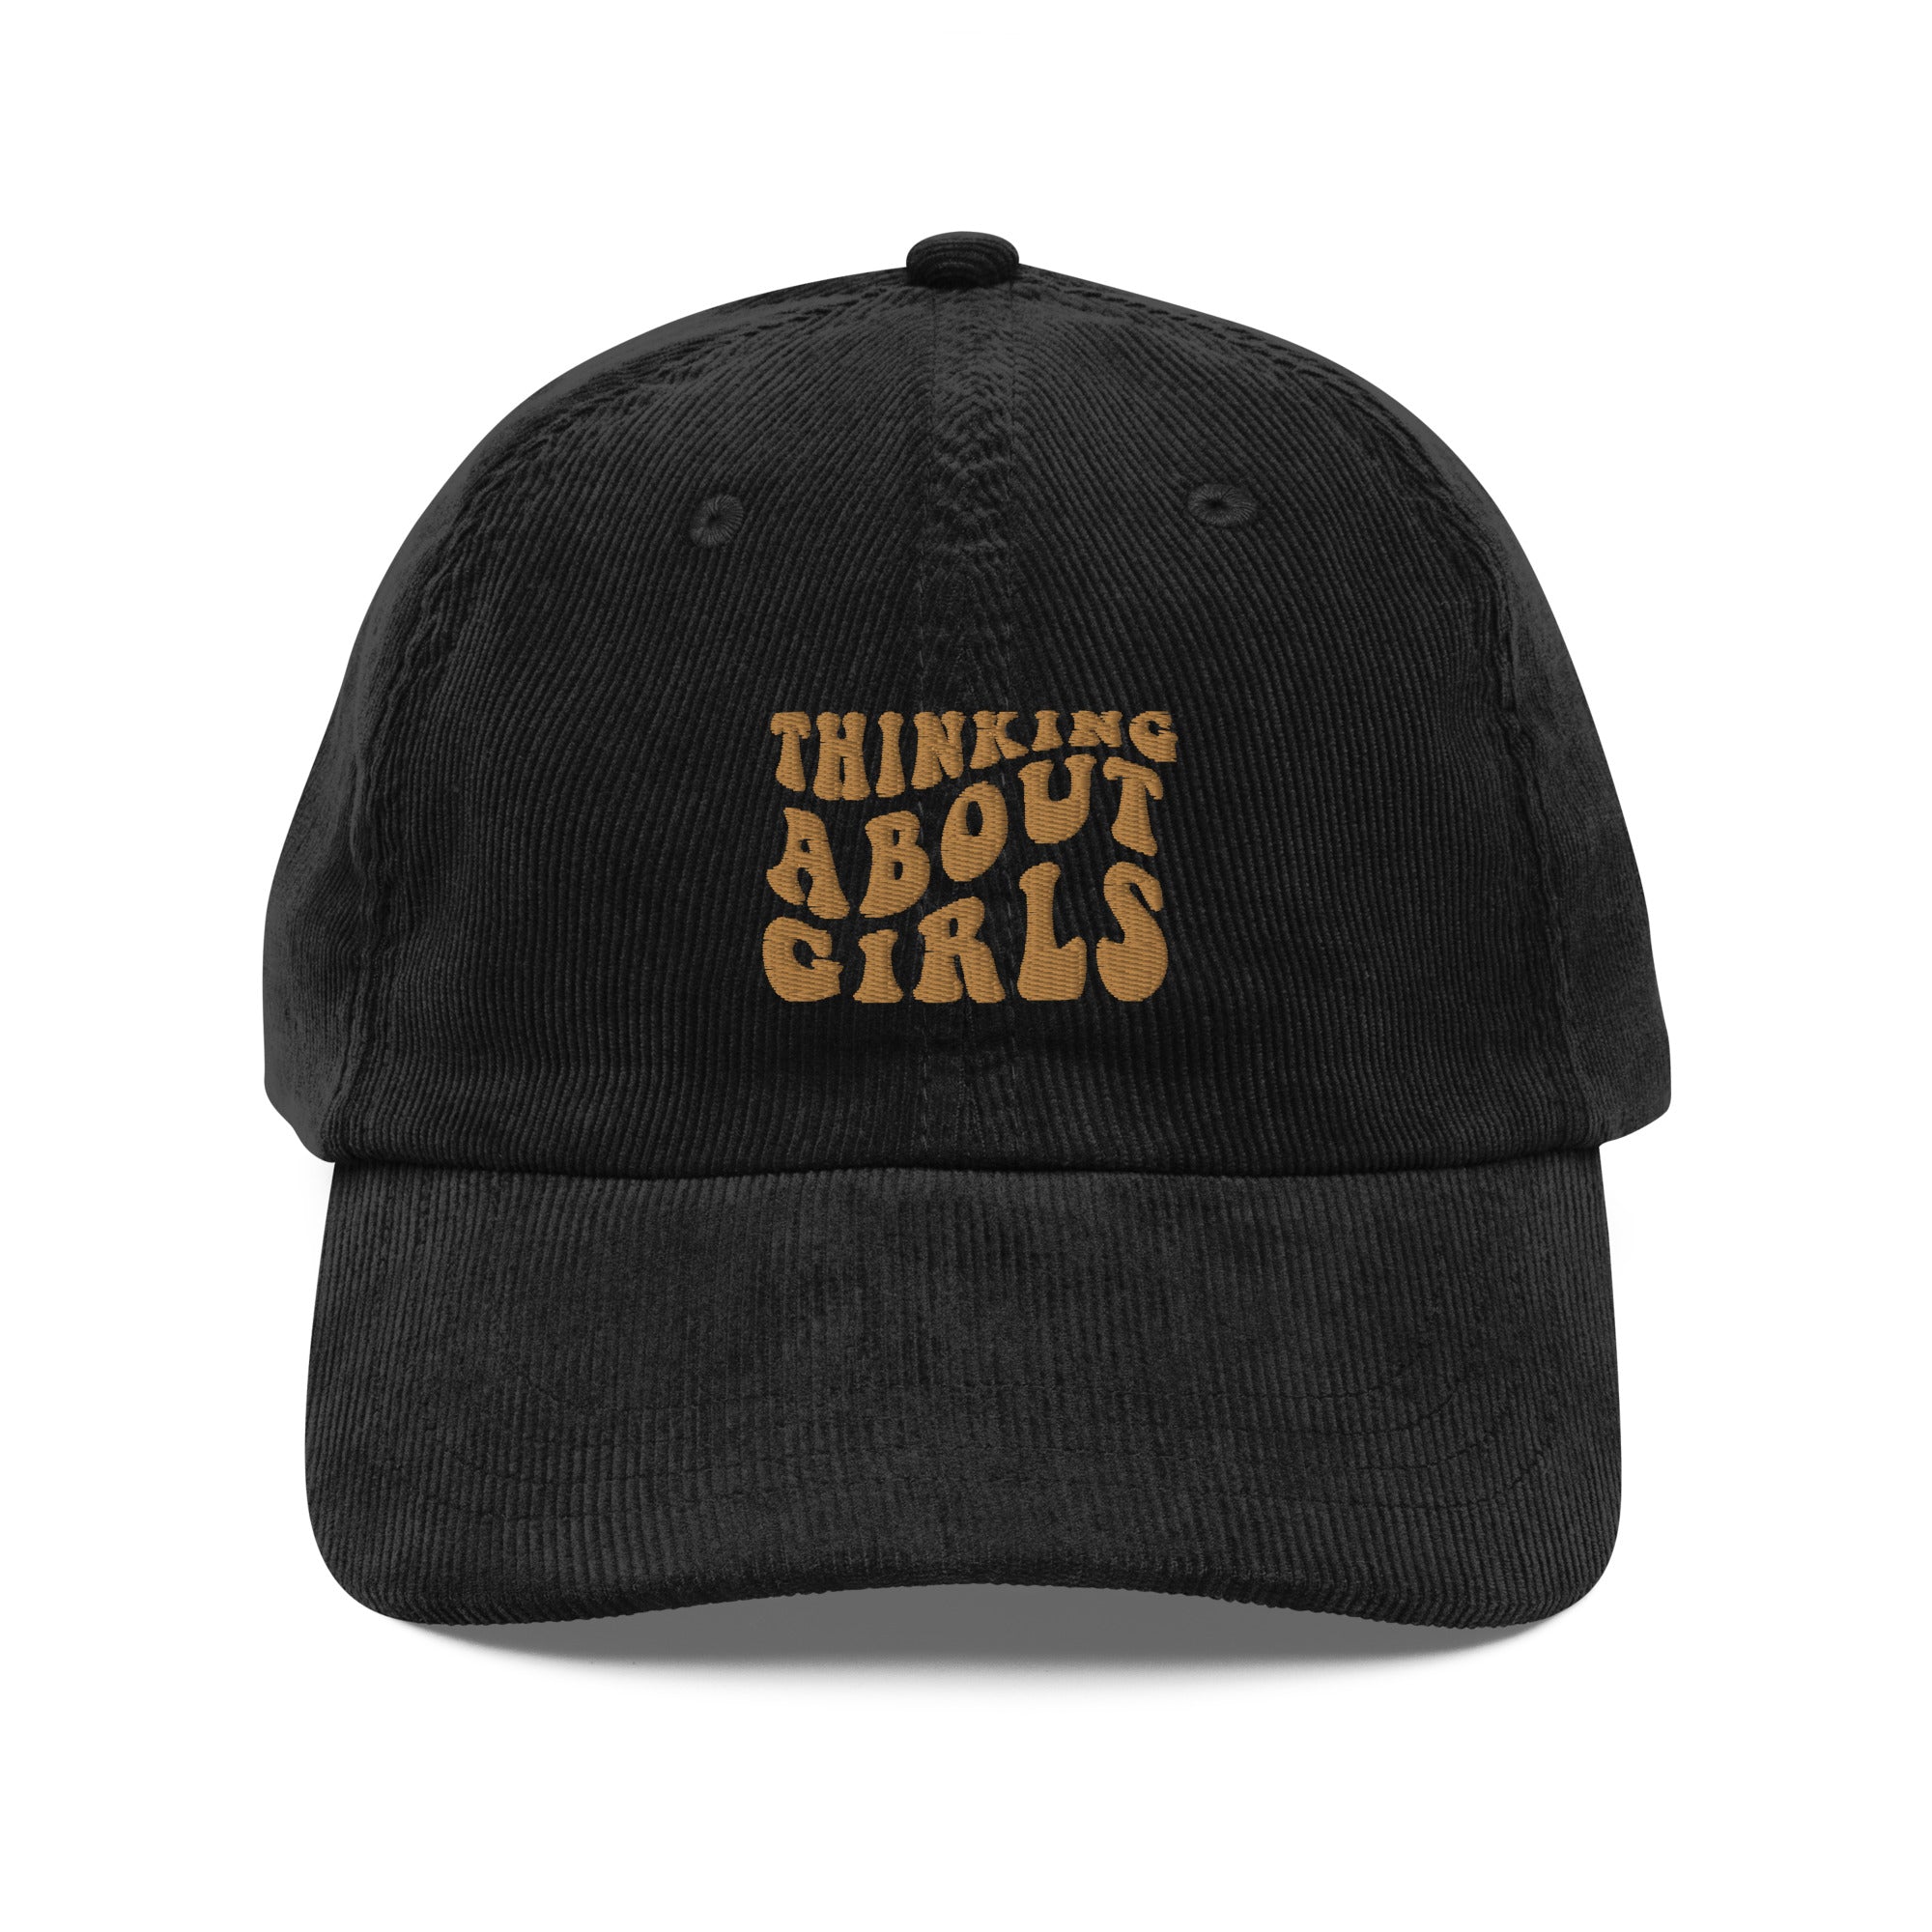 Thinking About Girls Vintage corduroy cap